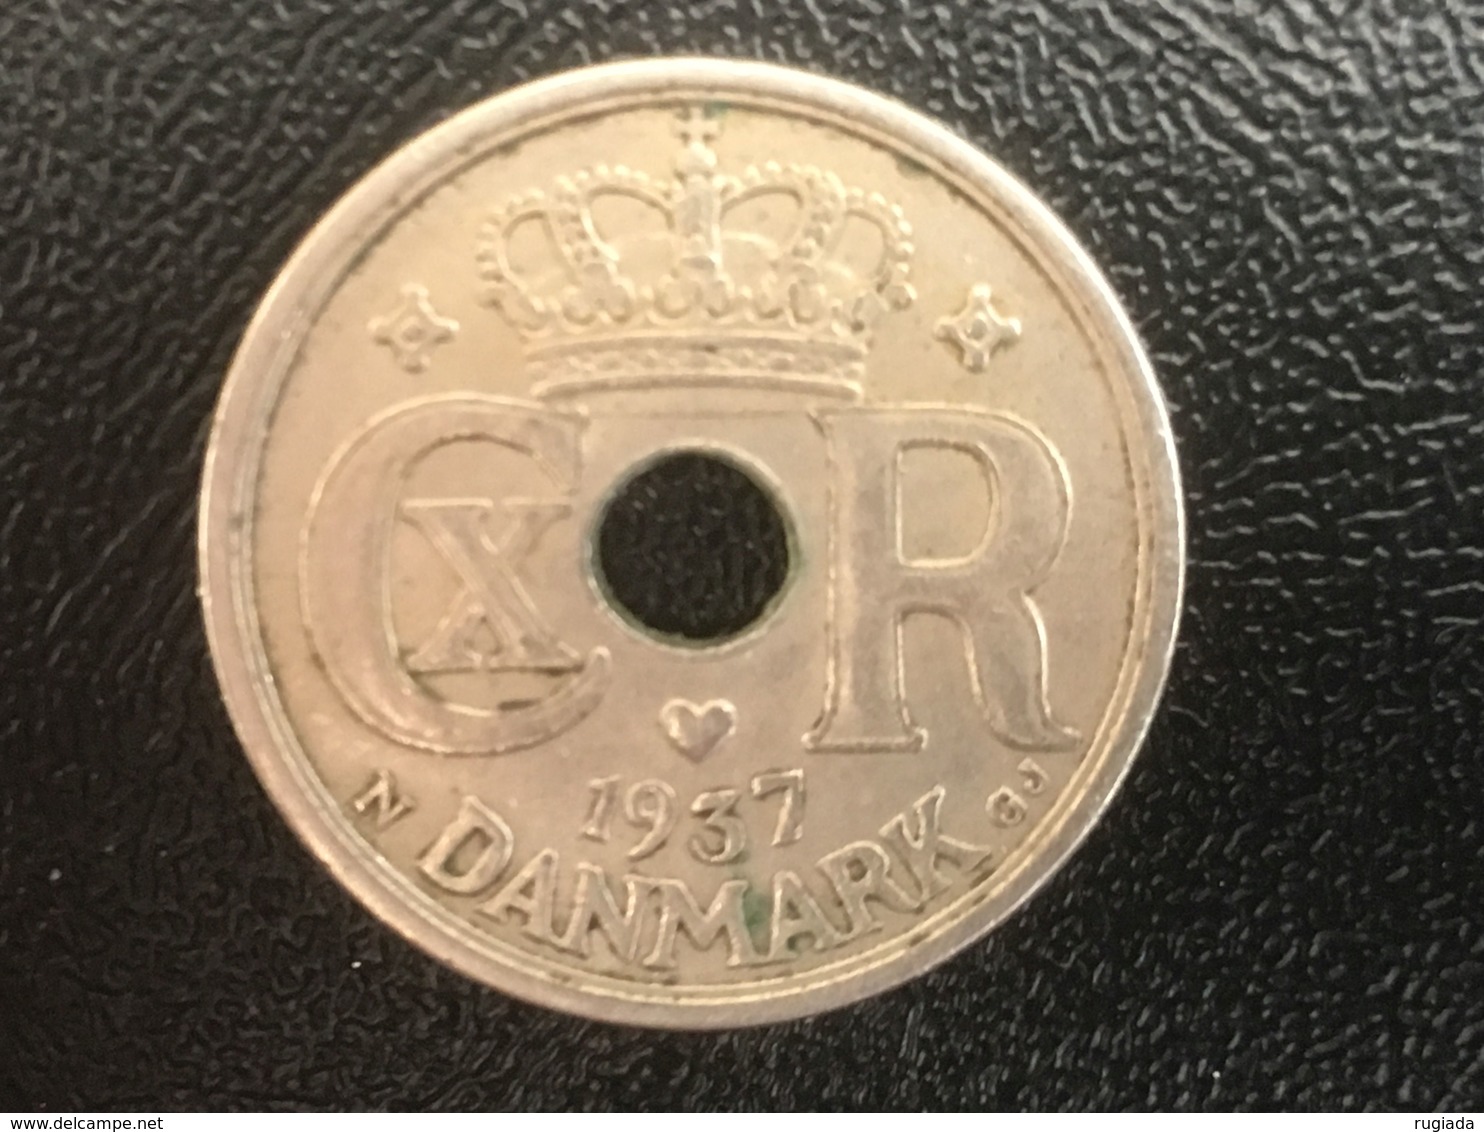 1937 Denmark Danmark 25 Ore Coin, Scarce Date - VF Very Fine - Denmark